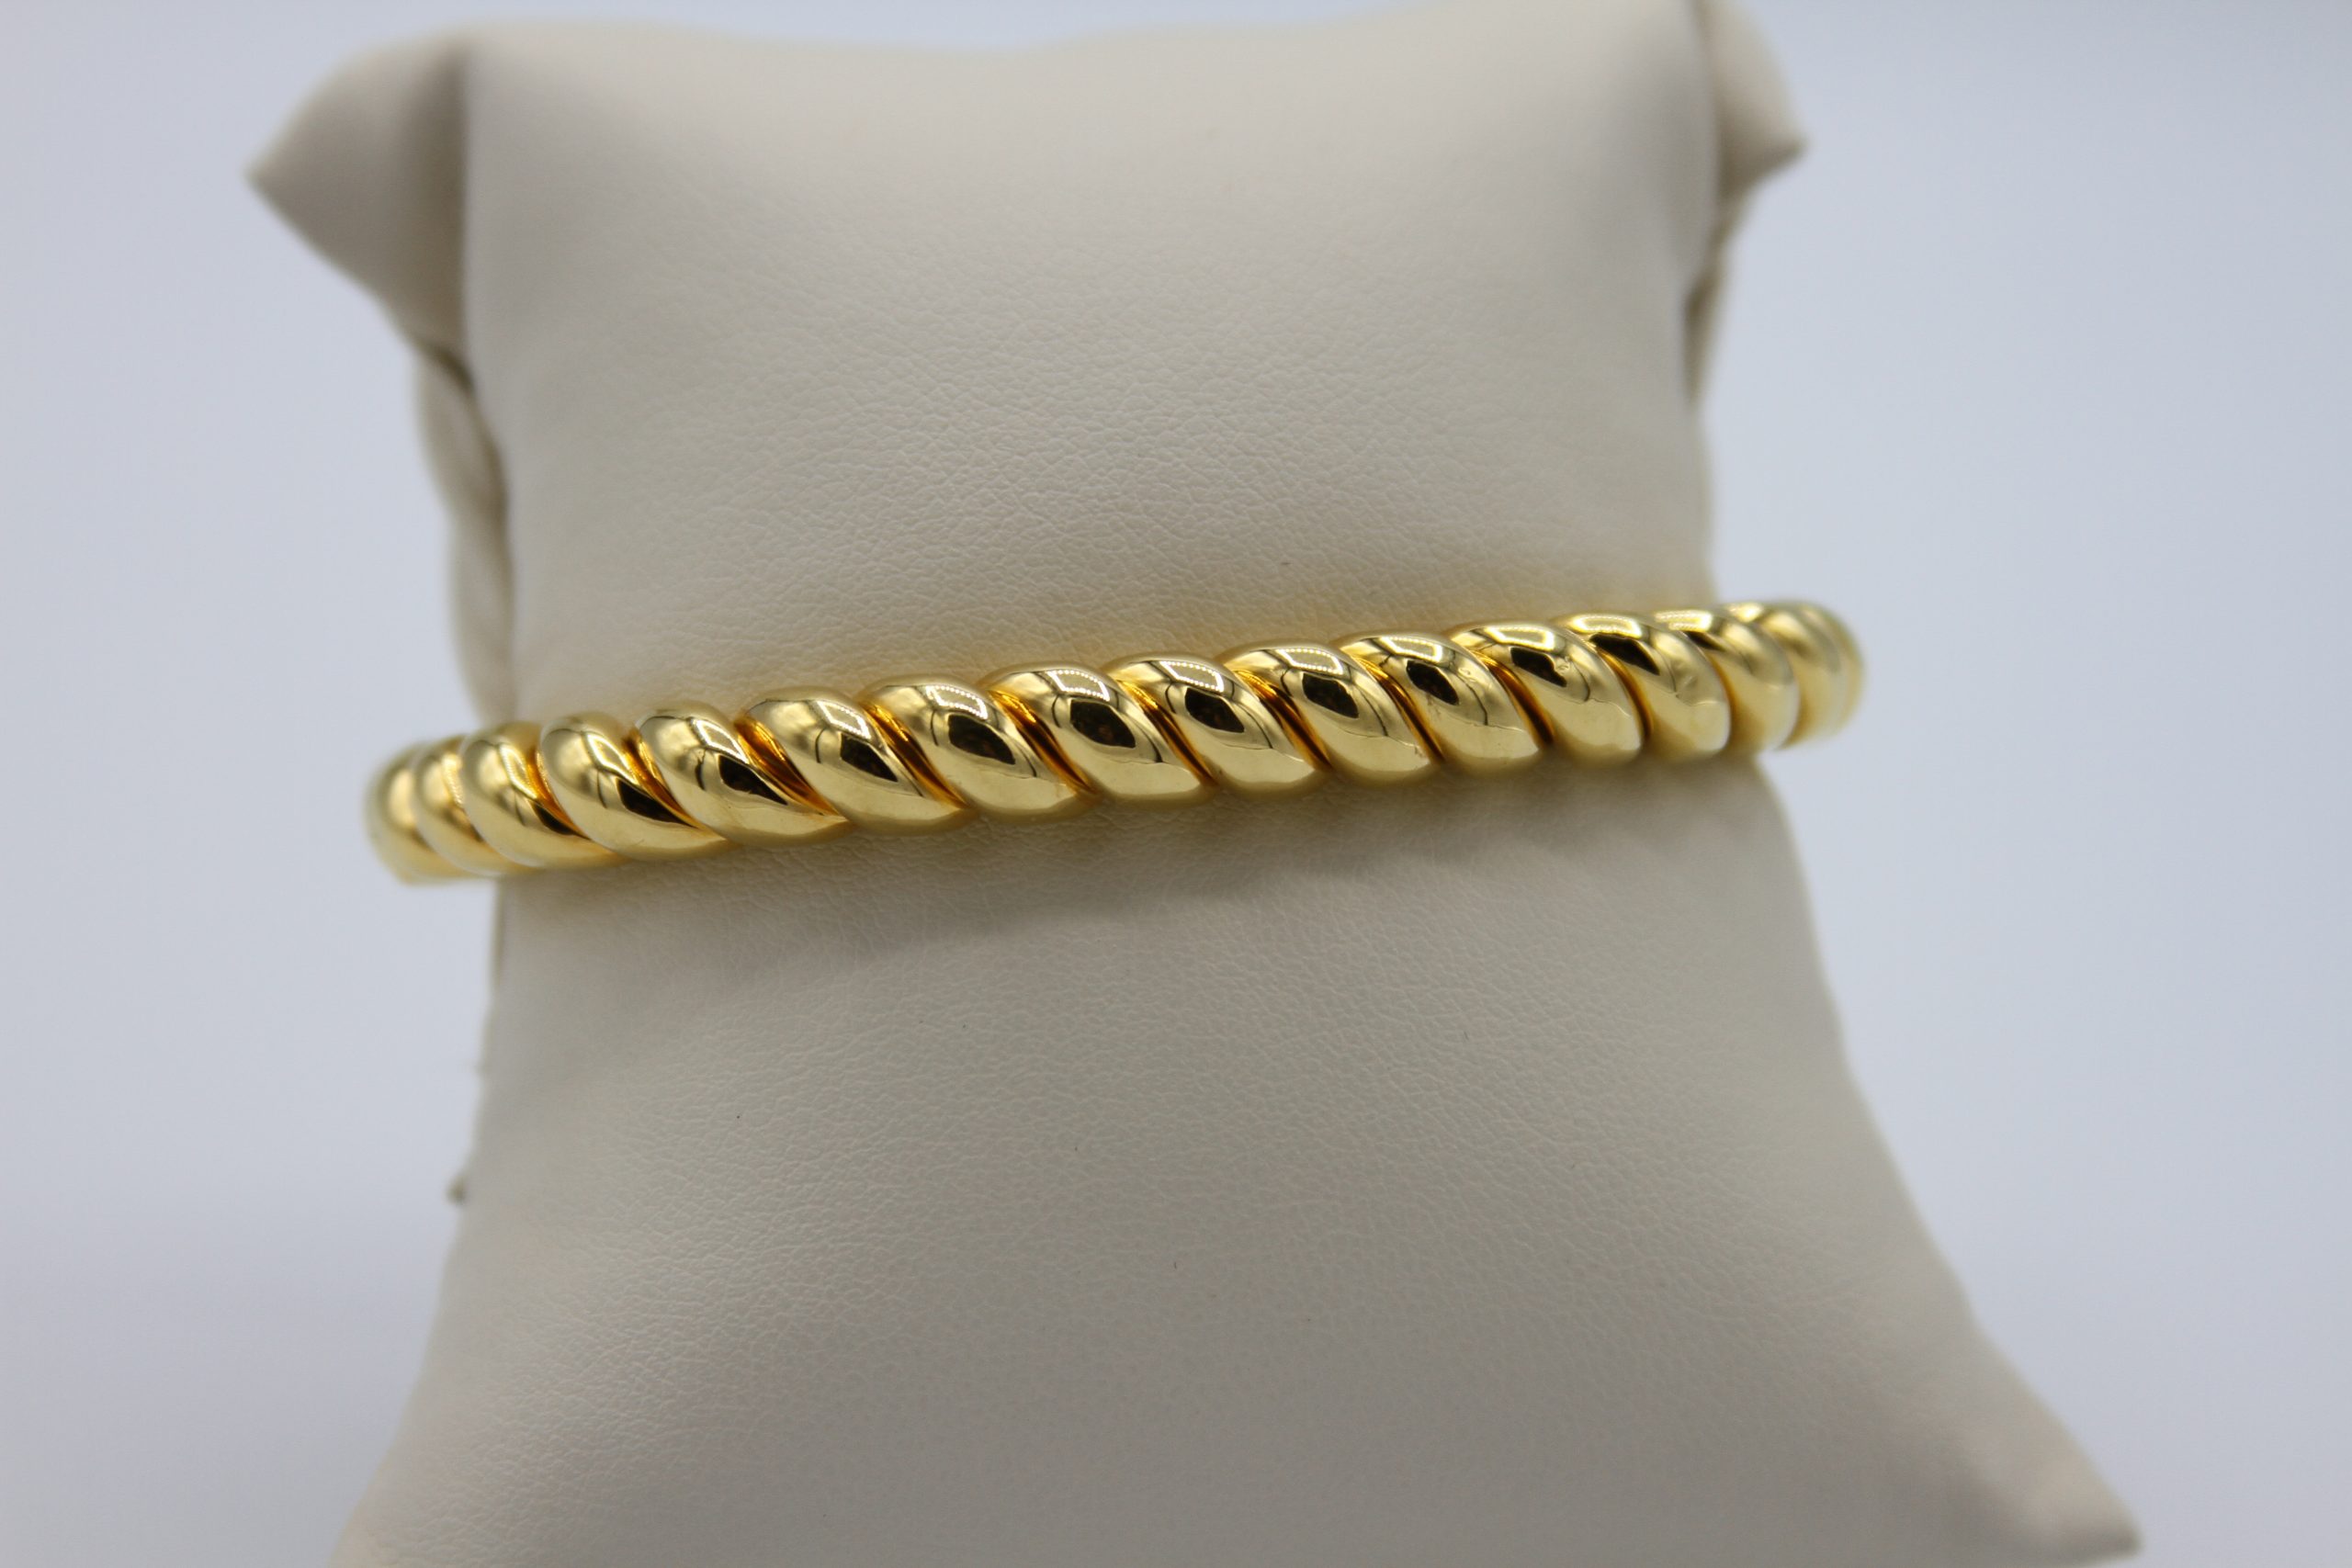 A twined gold bracelet